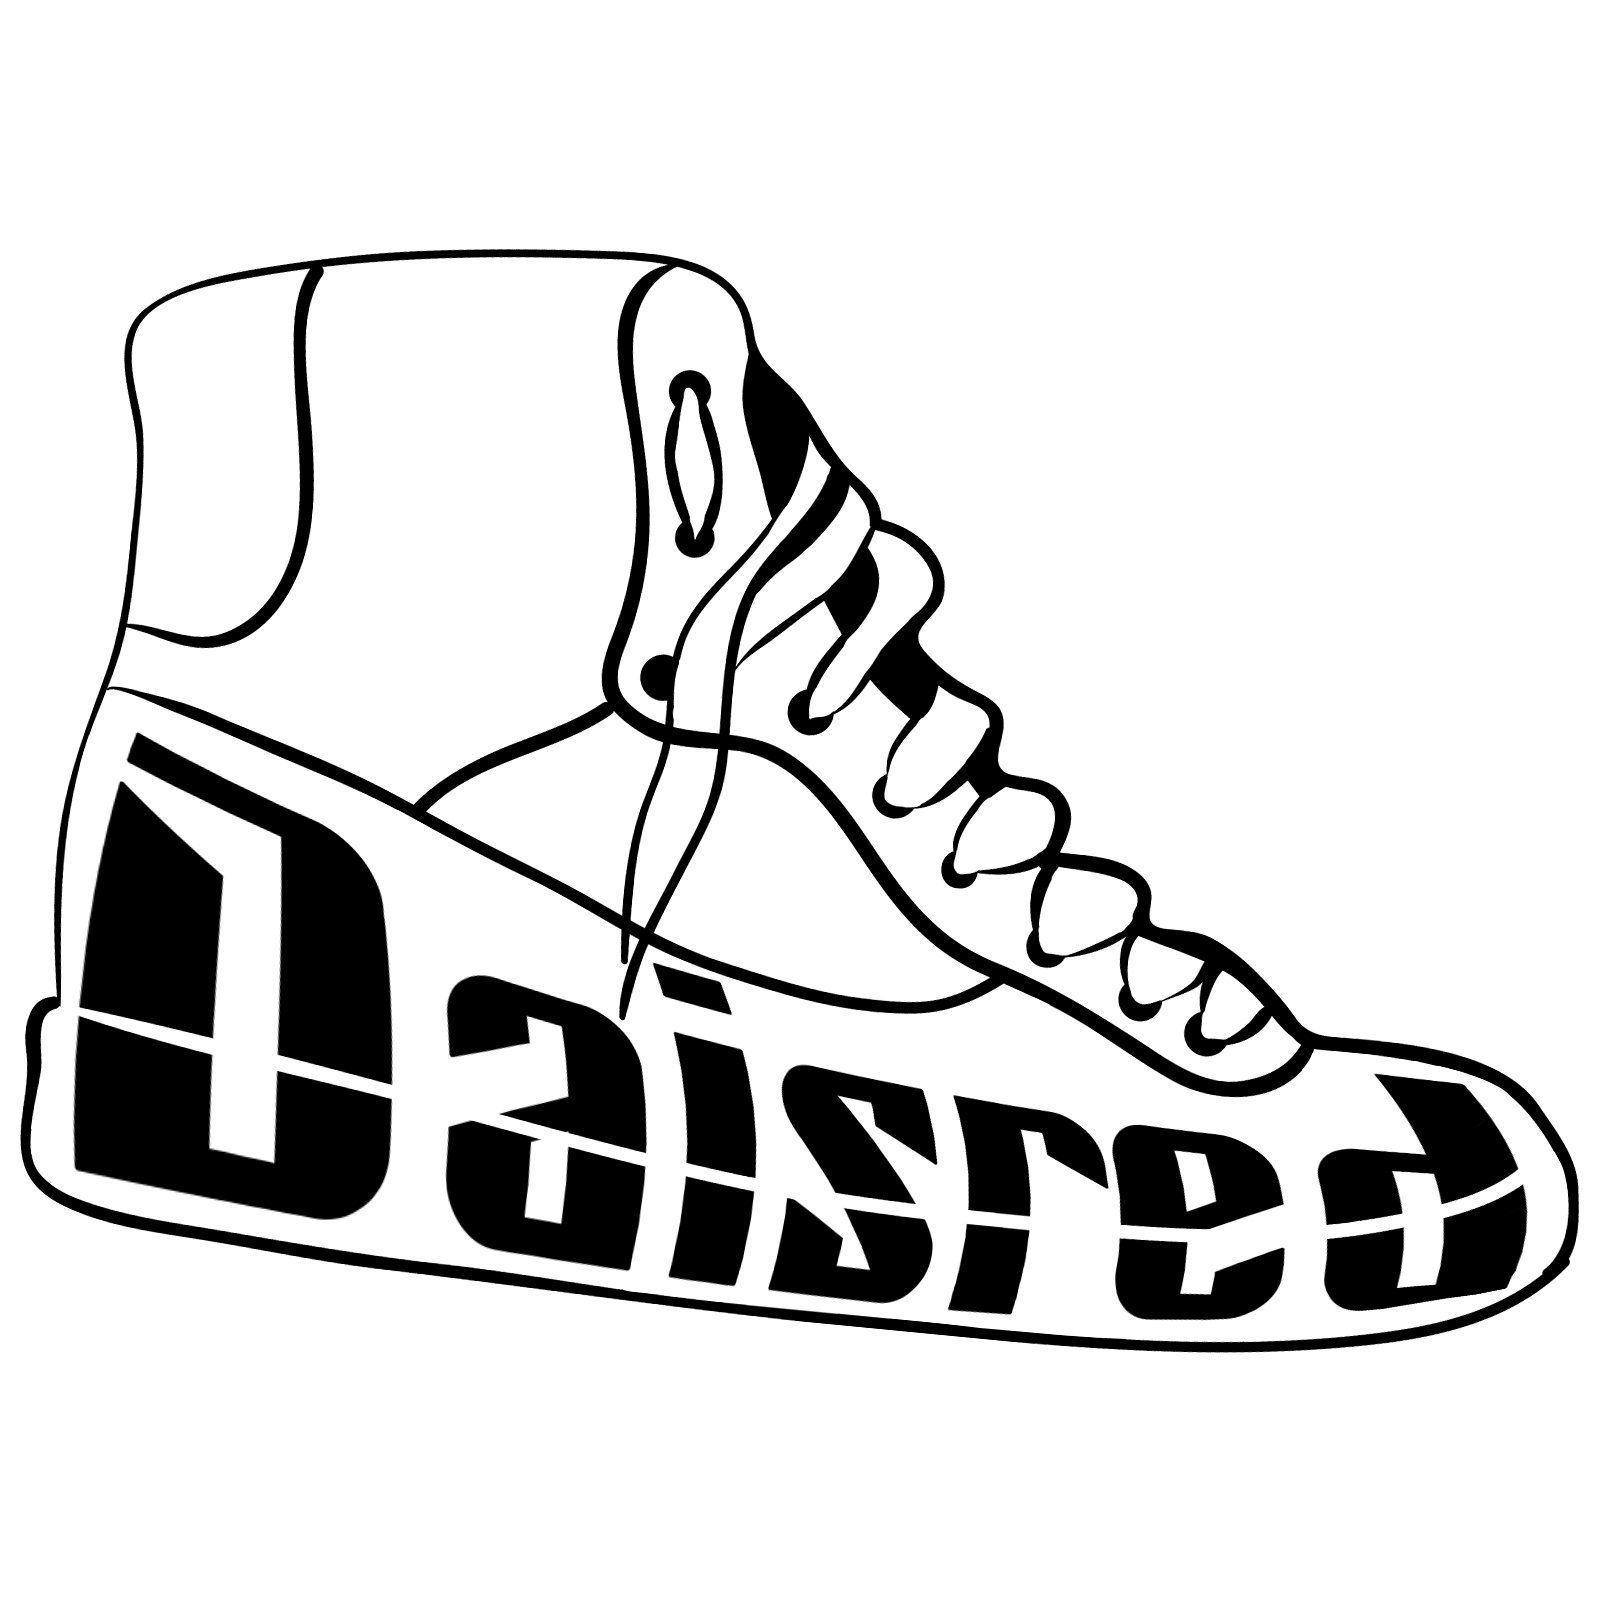 Daisred